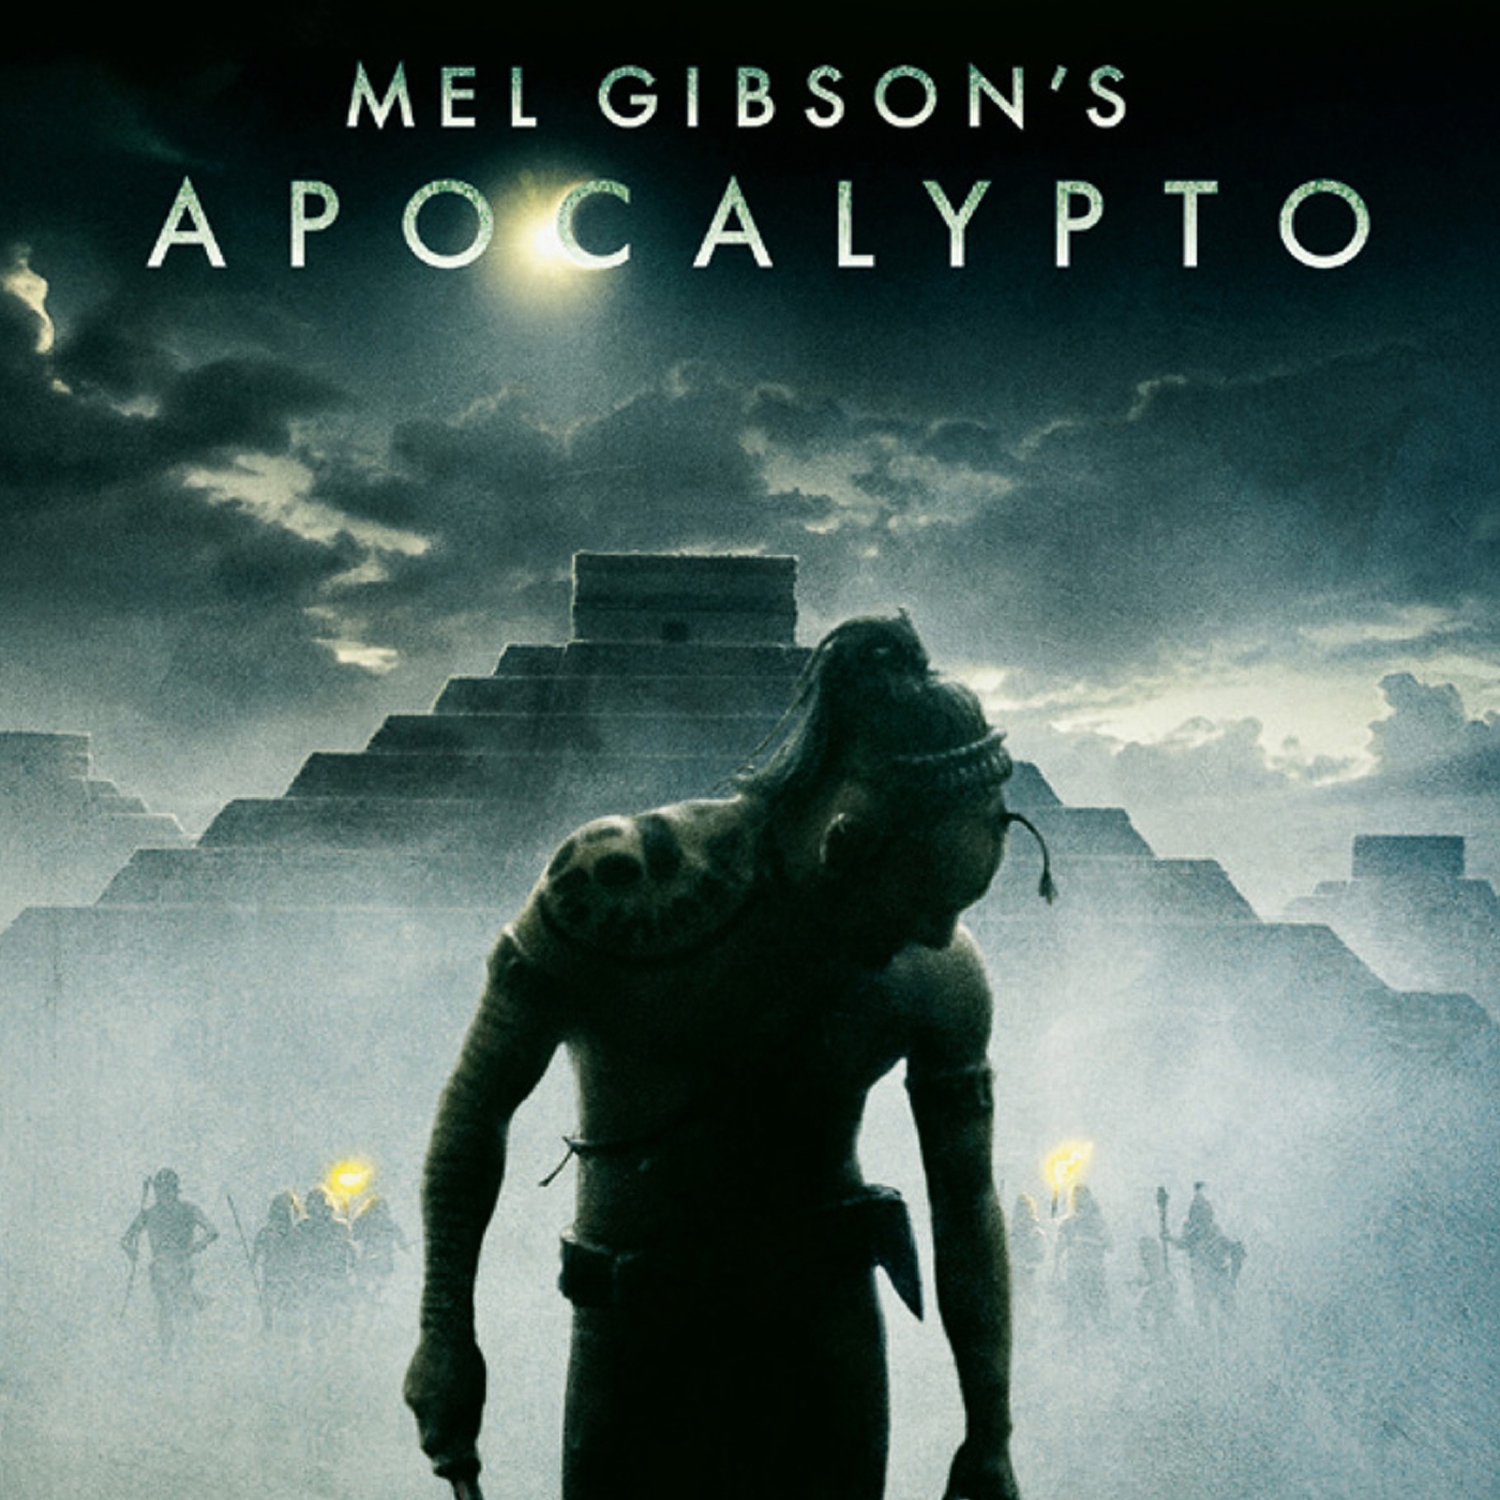 danielle barca recommends apocalypto download full movie pic